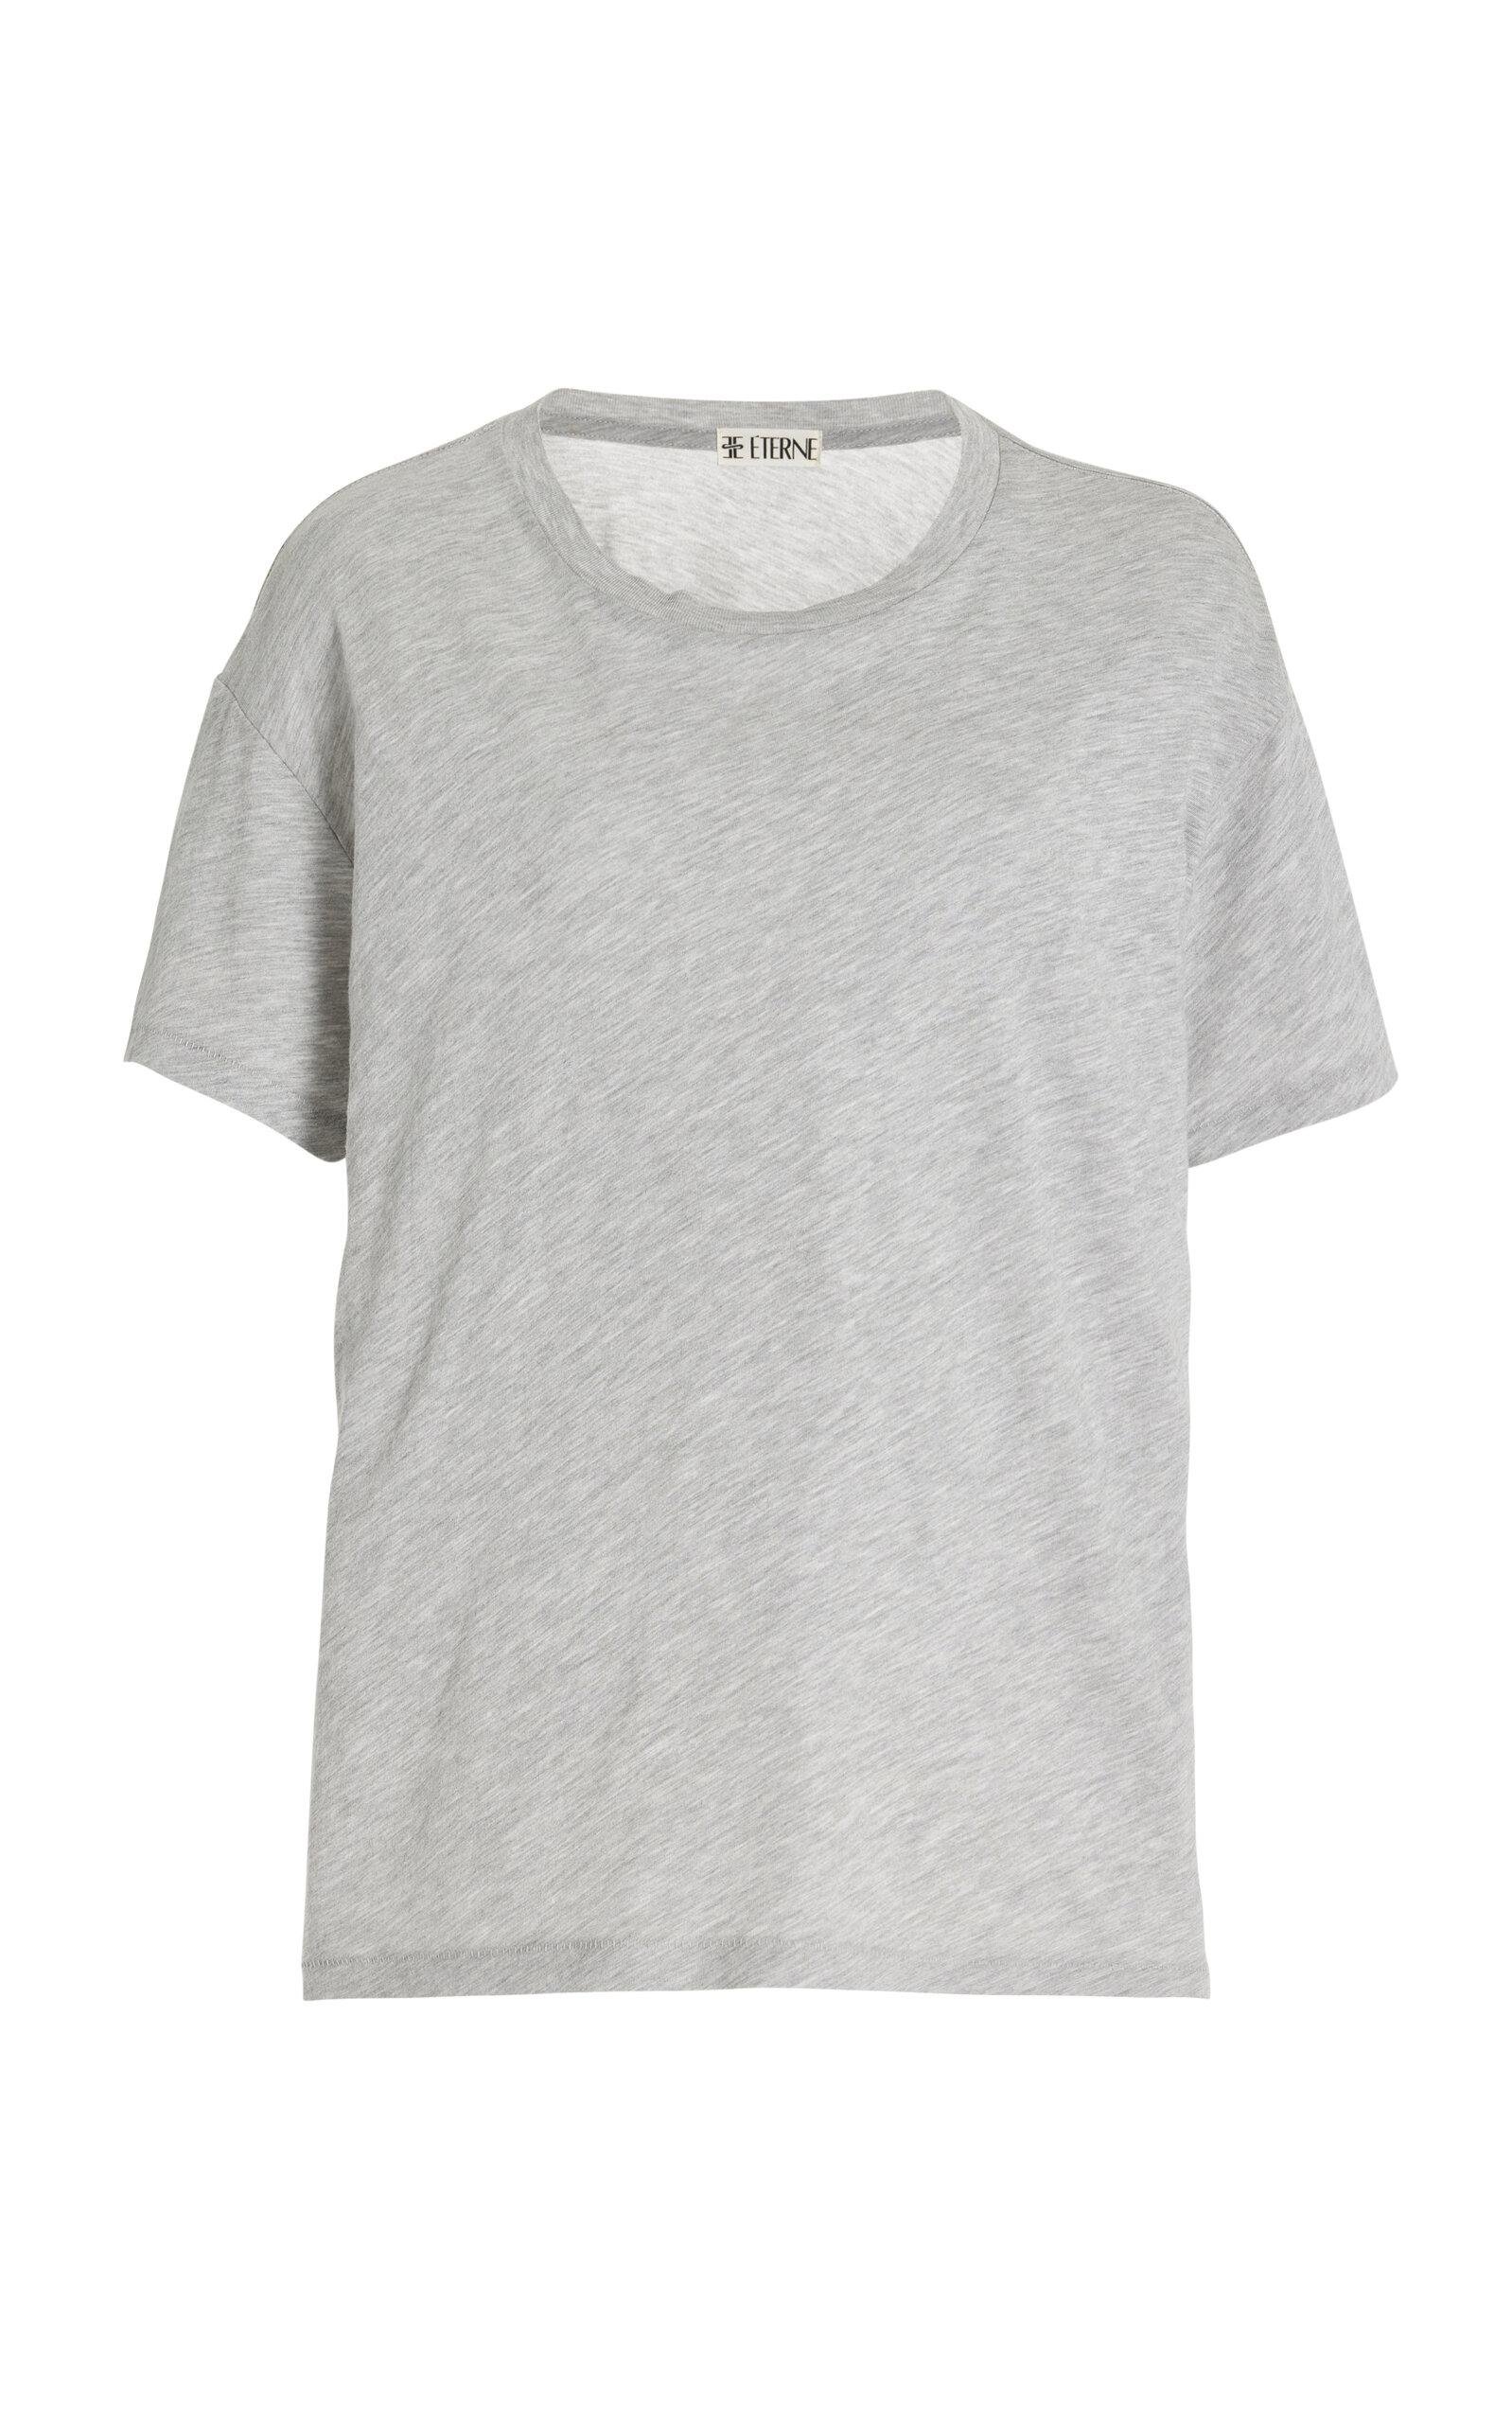 Éterne - Cotton-Modal Boyfriend T-Shirt - Grey - S - Moda Operandi by ETERNE